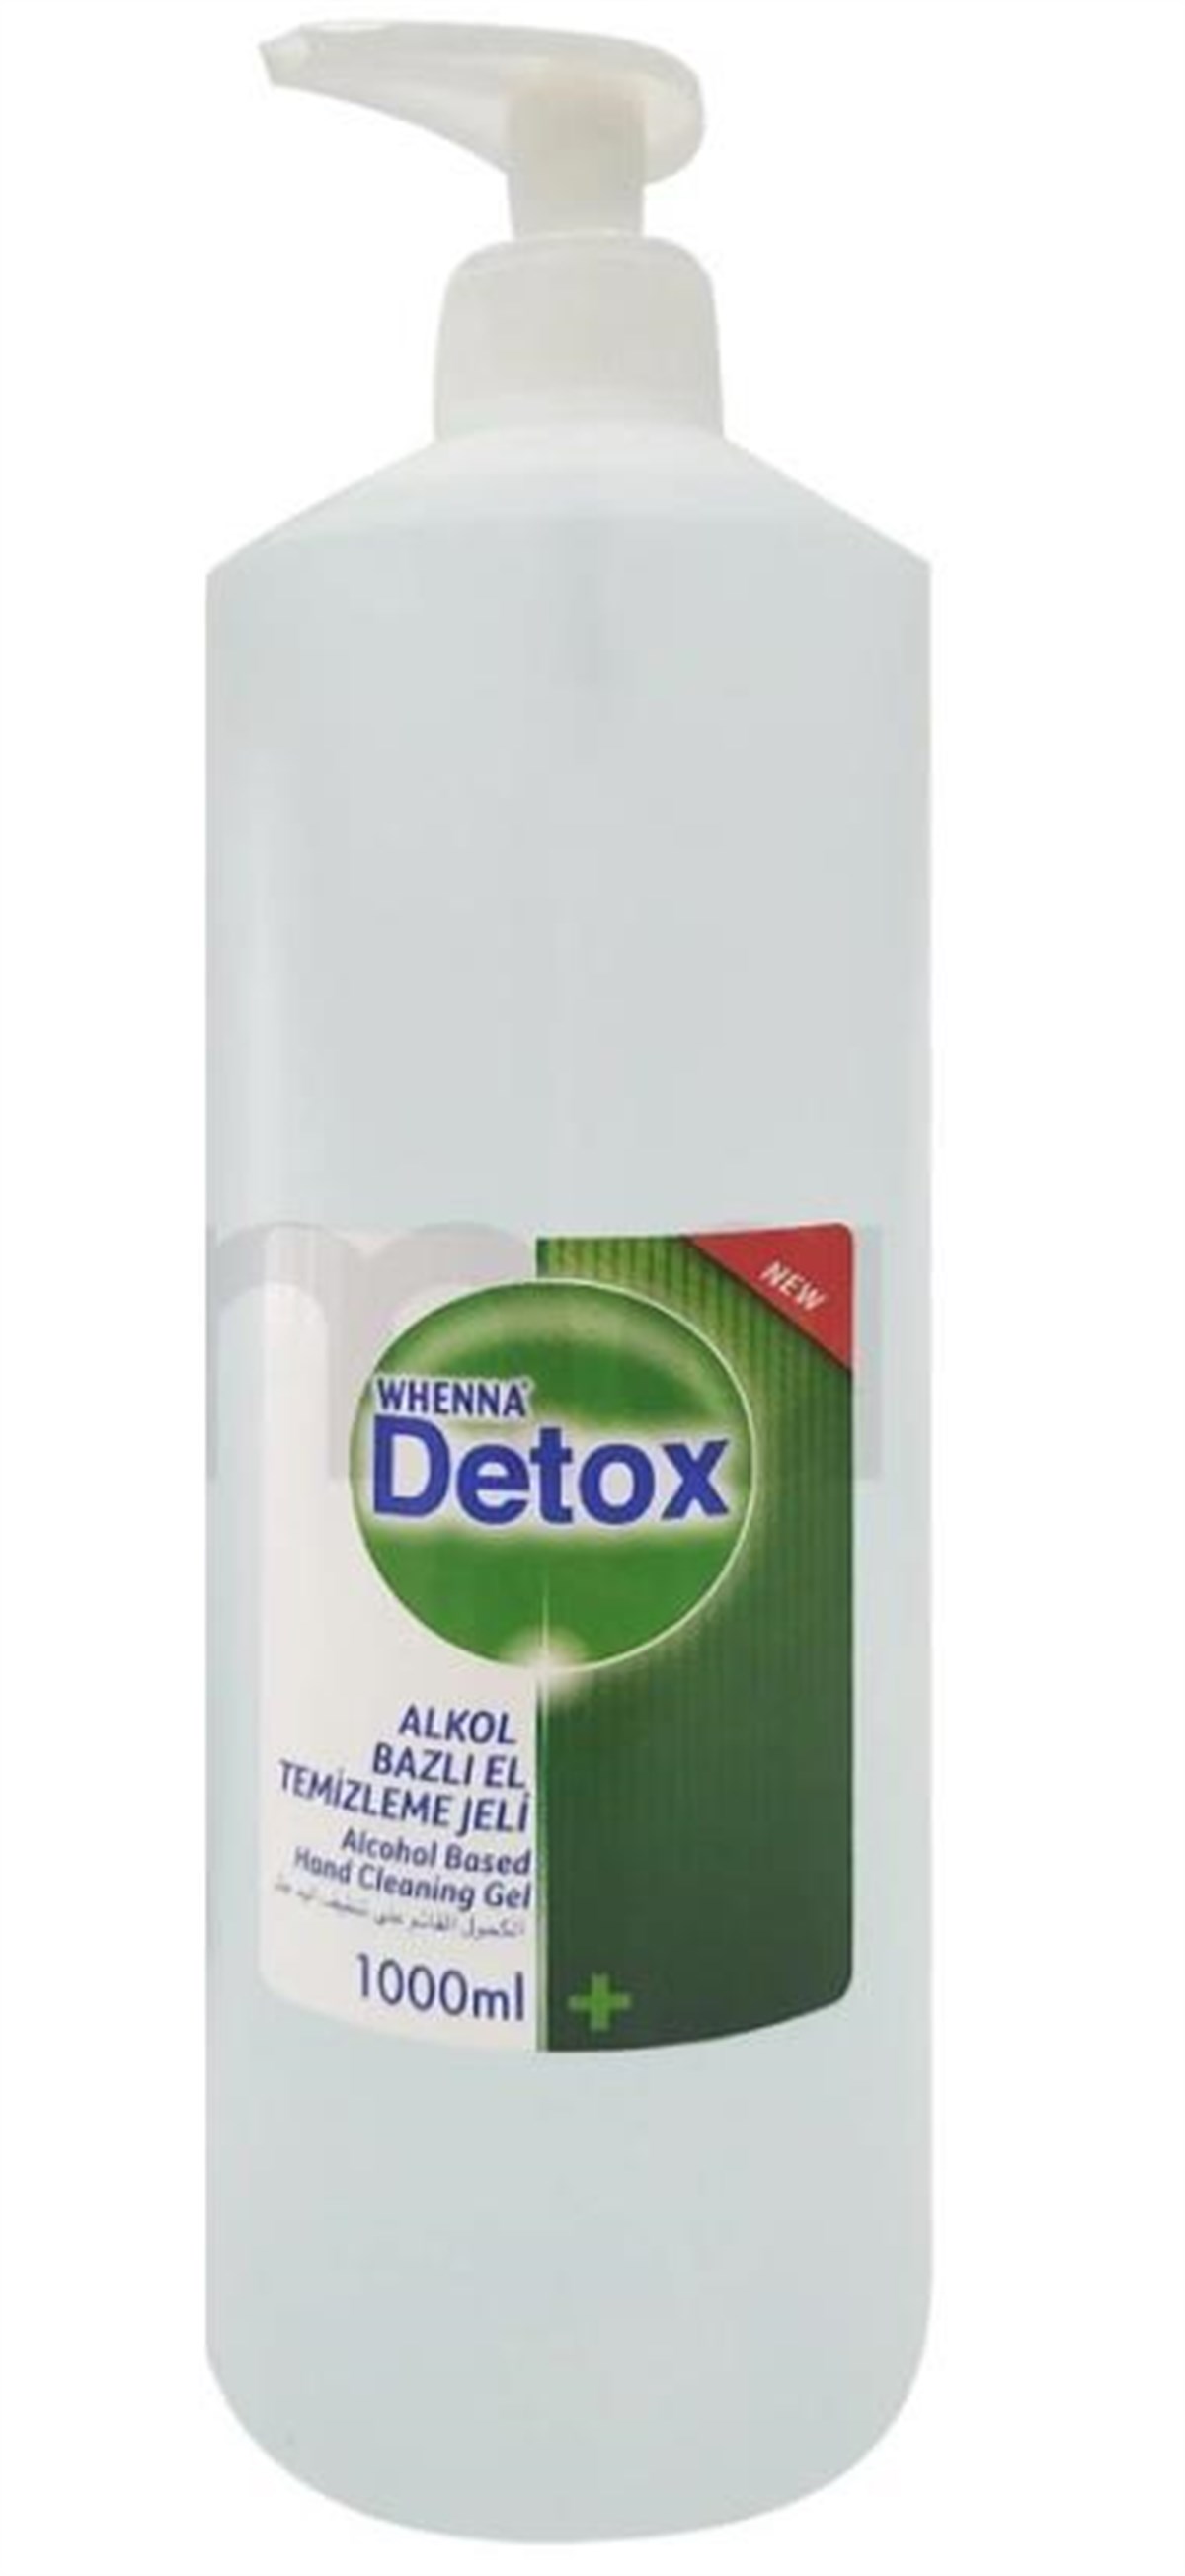 Whenna Detox Antibacterial Sanitizer 1000 ml-LeylekKapida.com